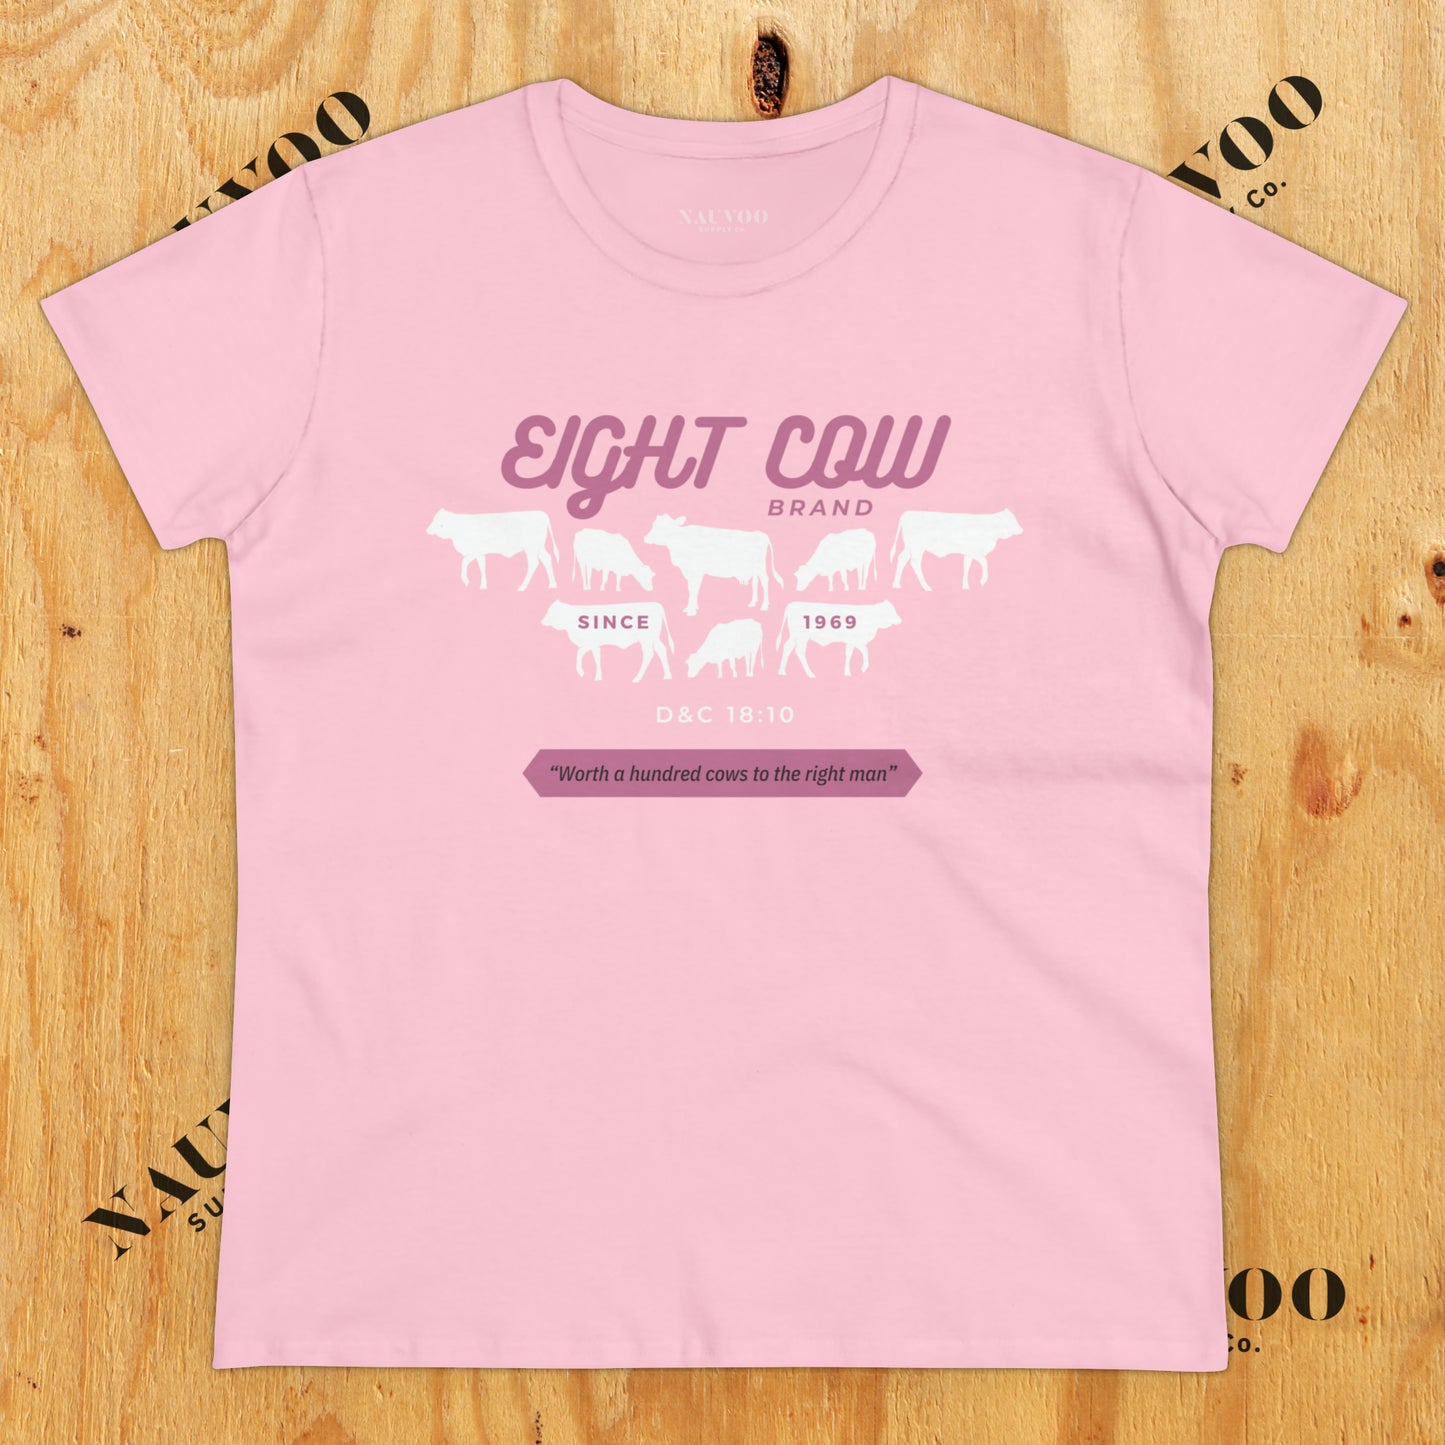 Johnny Lingo 8 Cow Brand Premium Women's Crewneck T-shirt